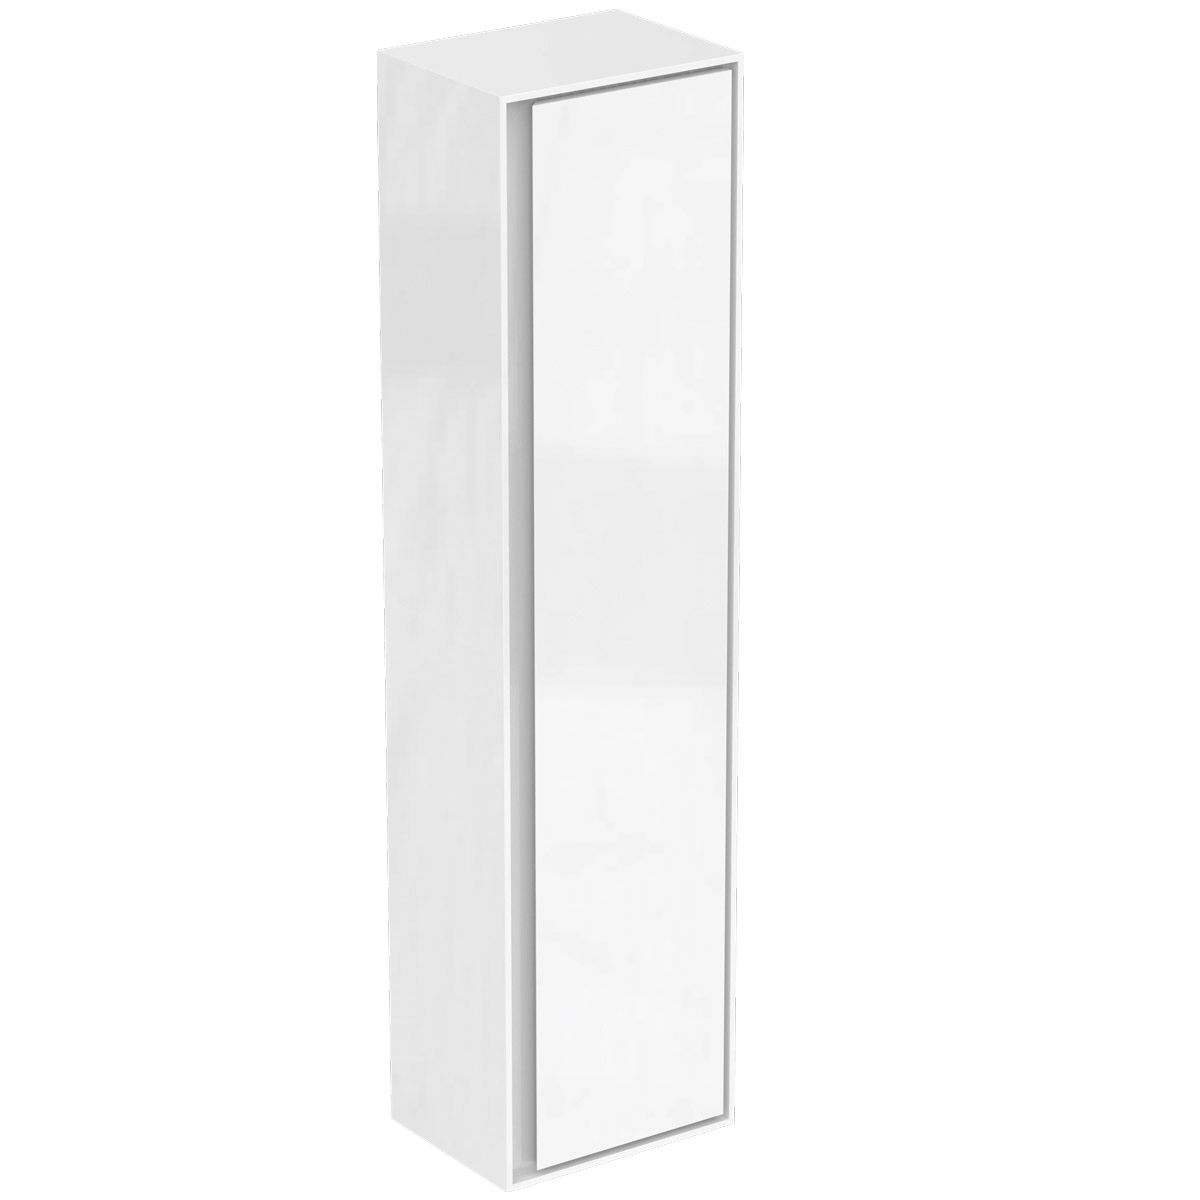 Ideal Standard Connect Air gloss and matt white wall cabinet